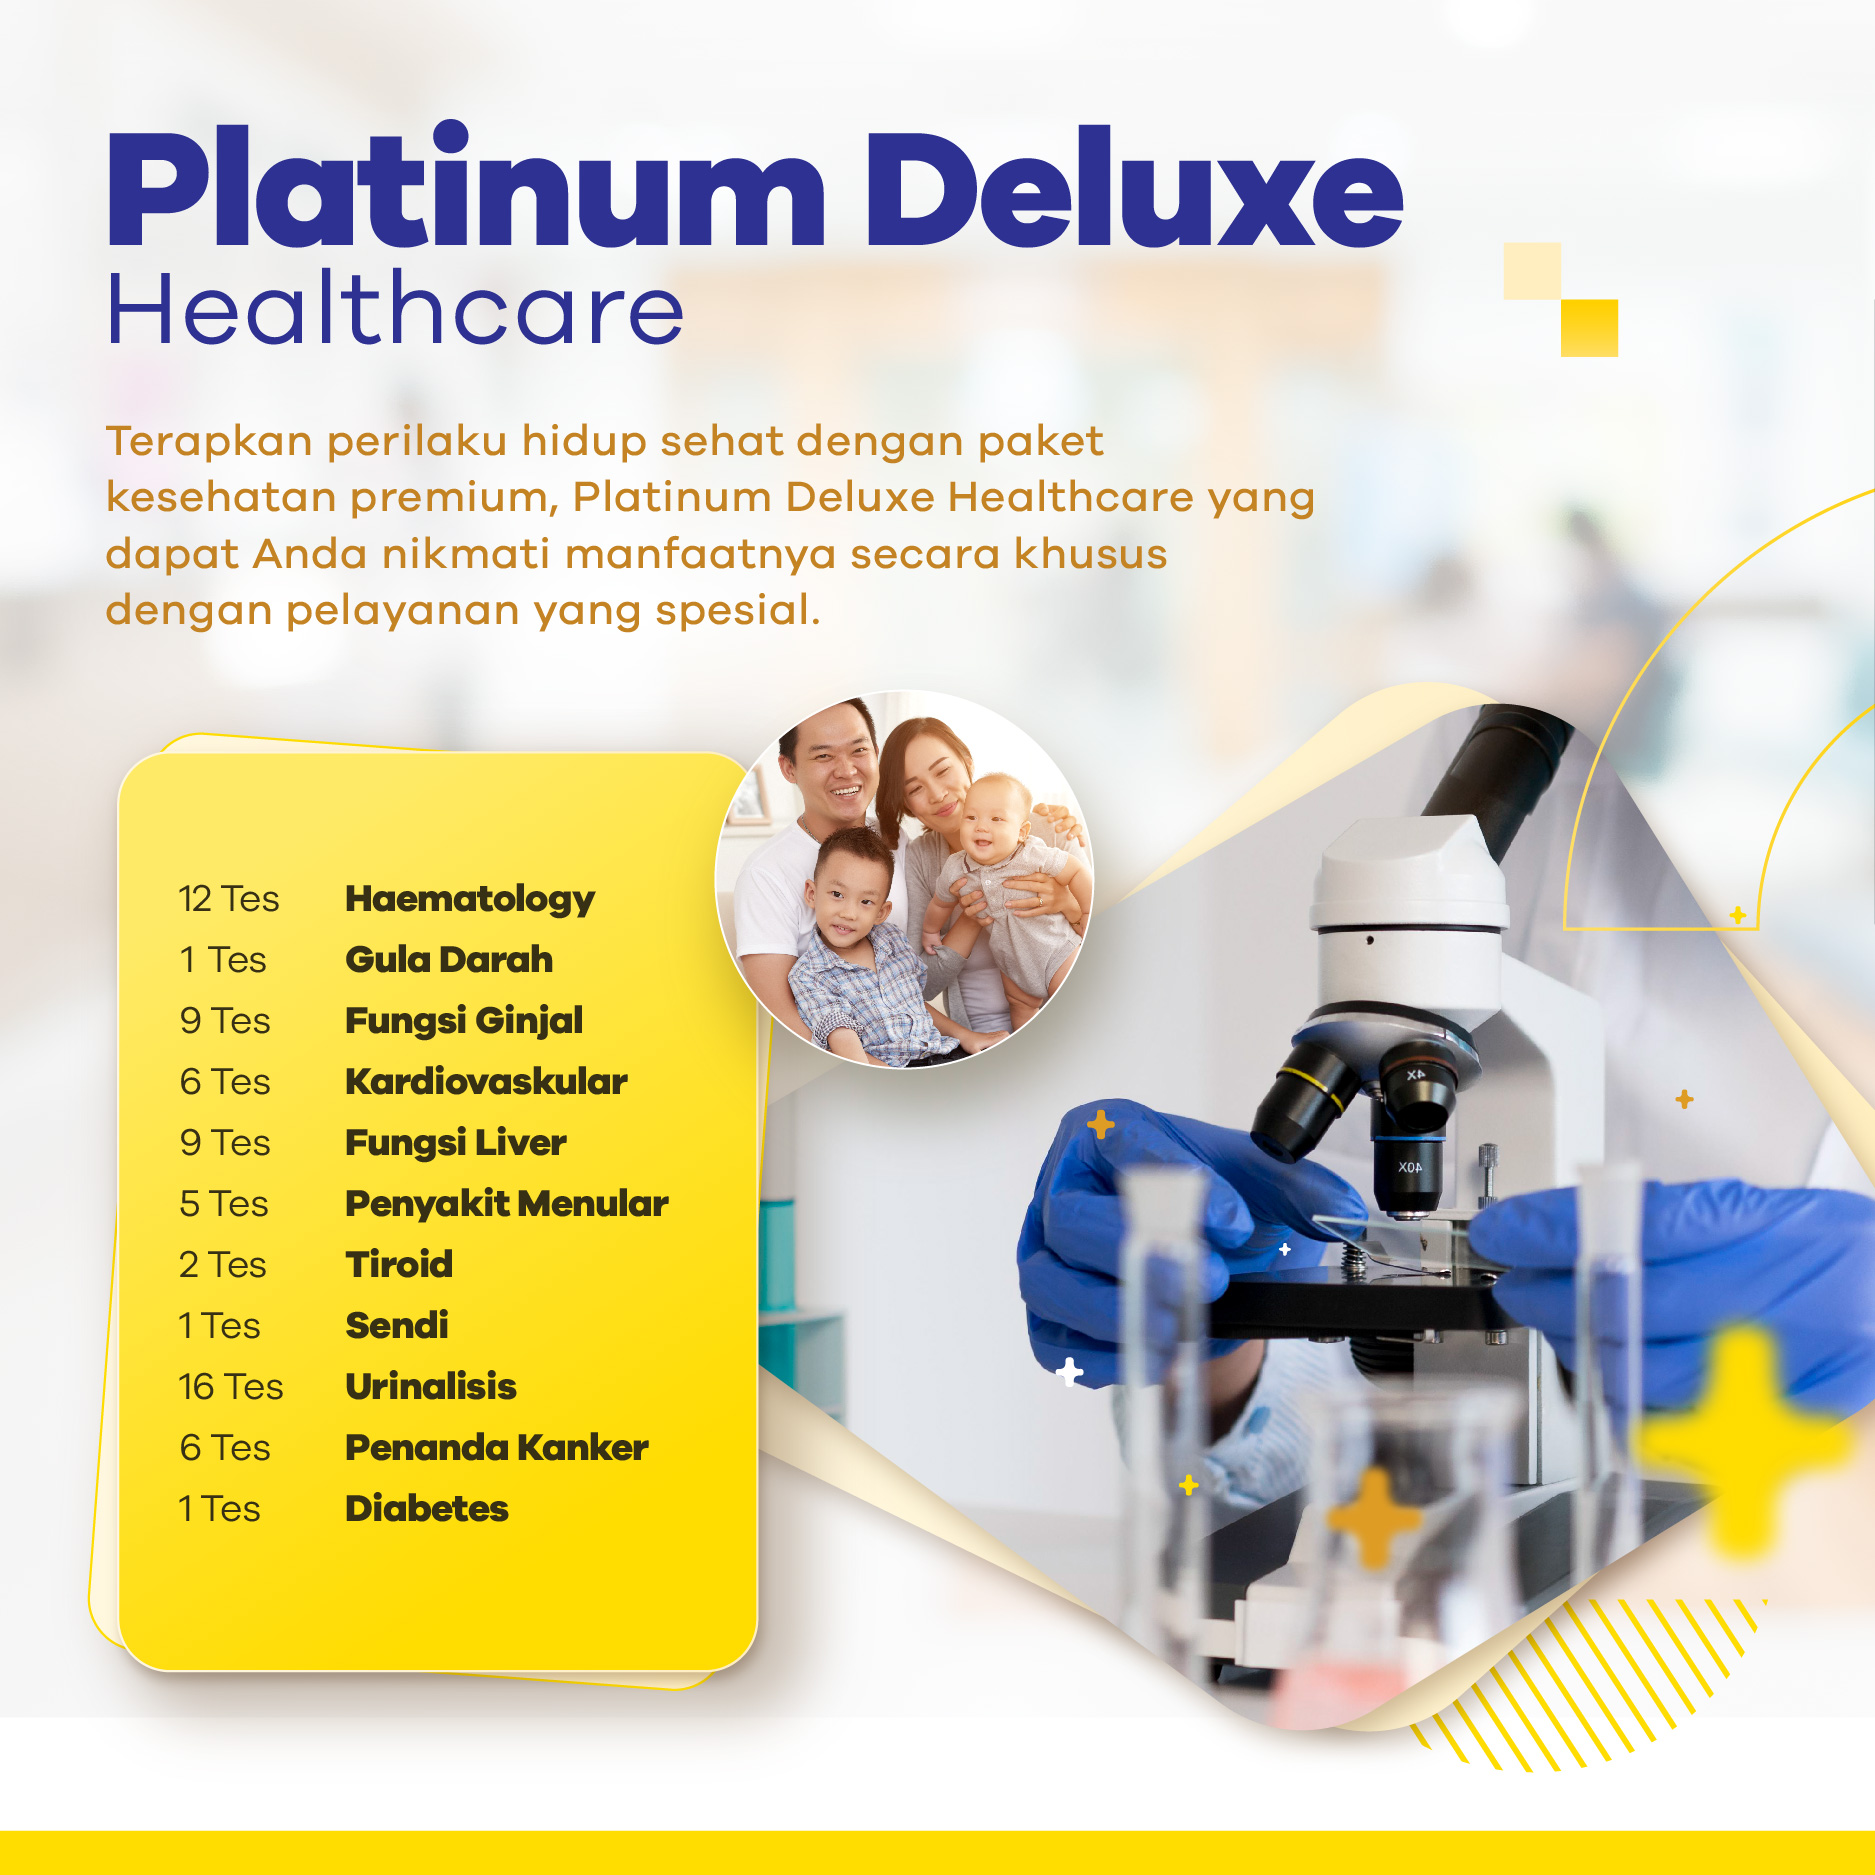 Platinum Deluxe Healthcare